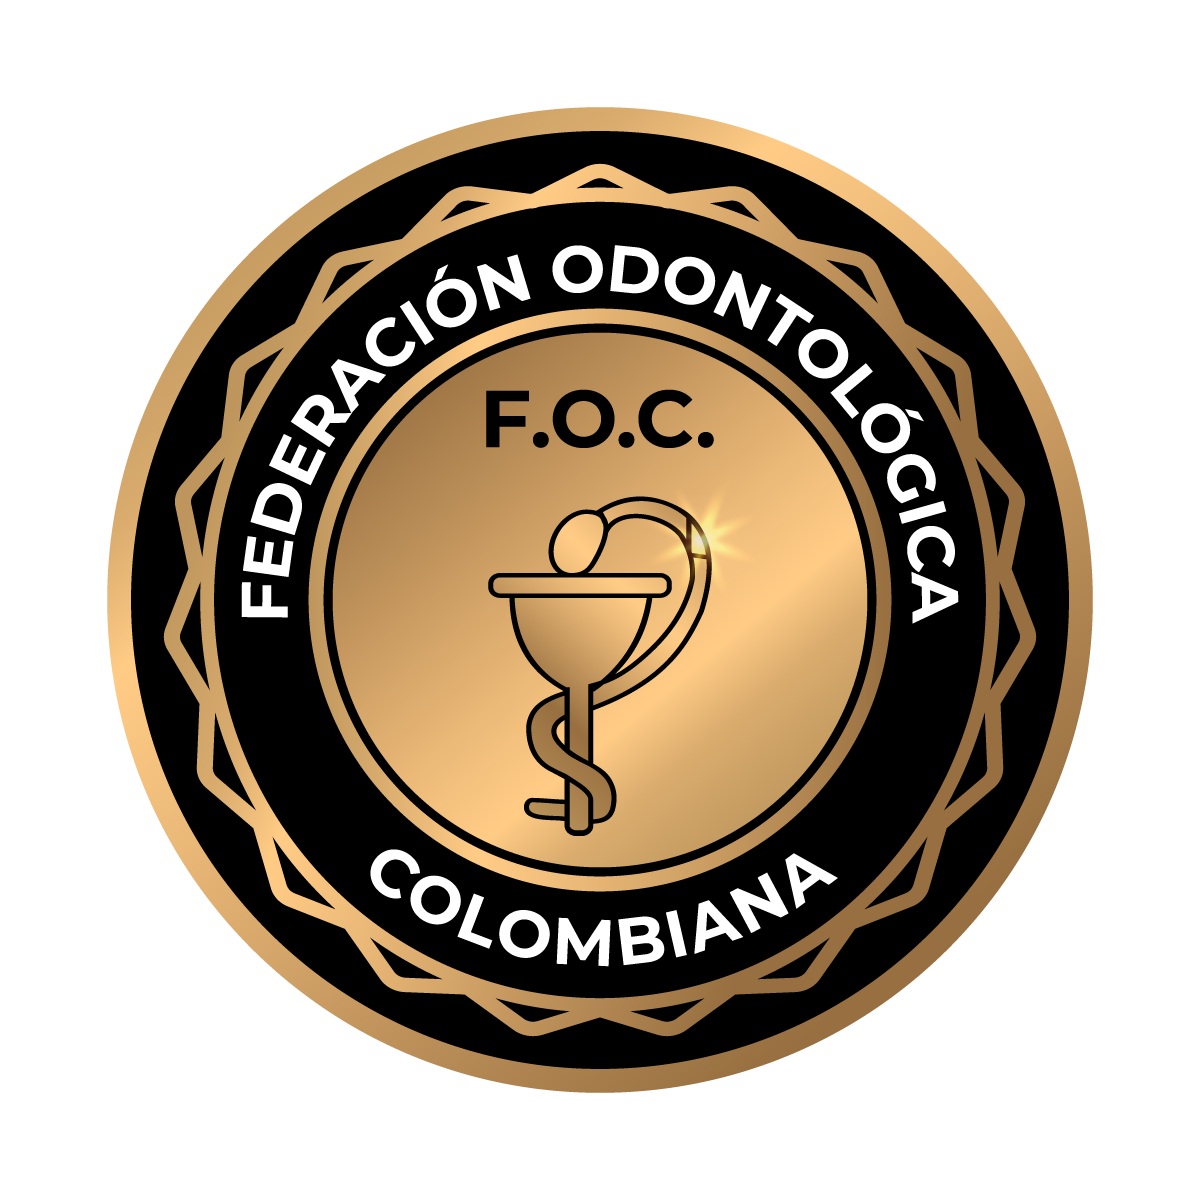 (c) Federacionodontologicacolombiana.org